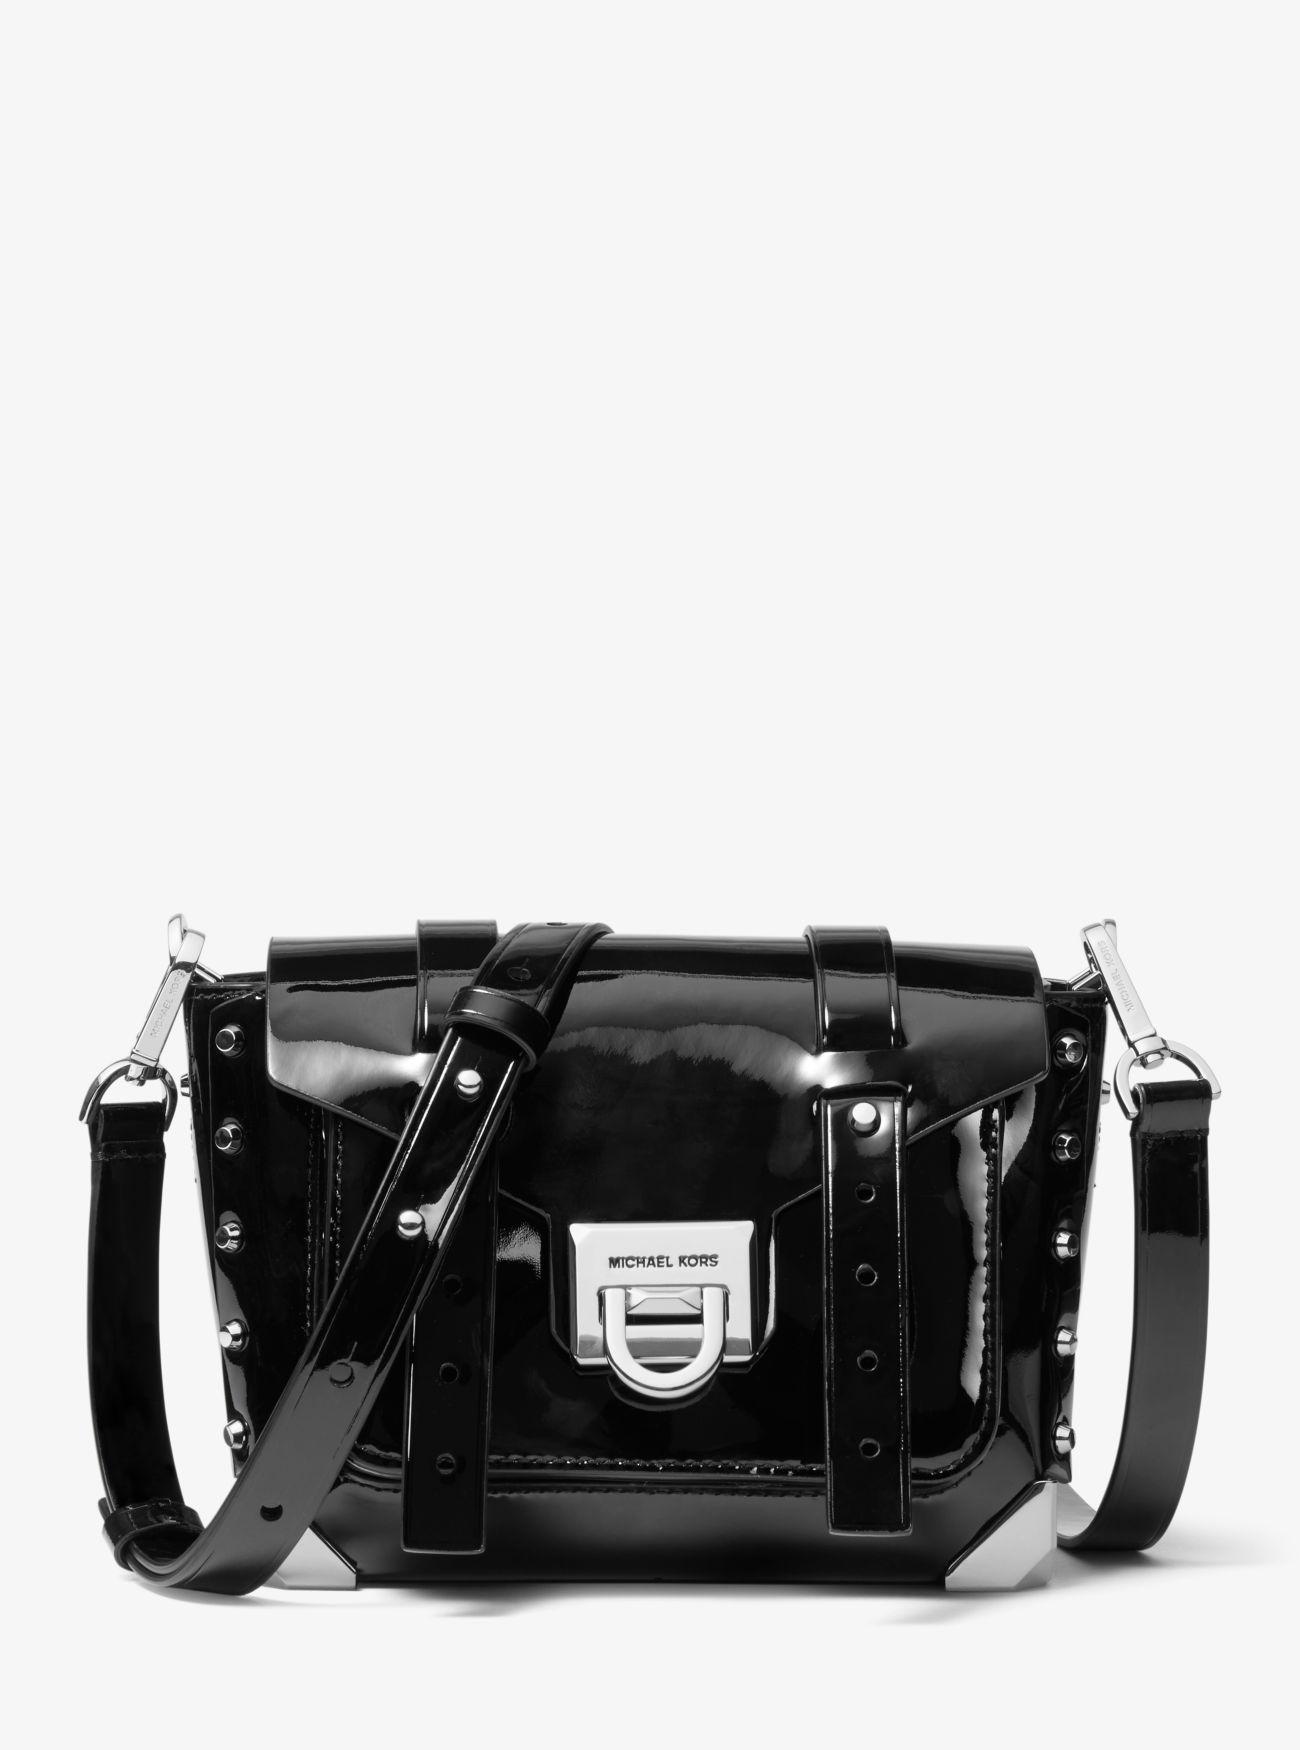 Michael Kors Mk Manhattan Small Patent Leather Crossbody Bag in Black | Lyst